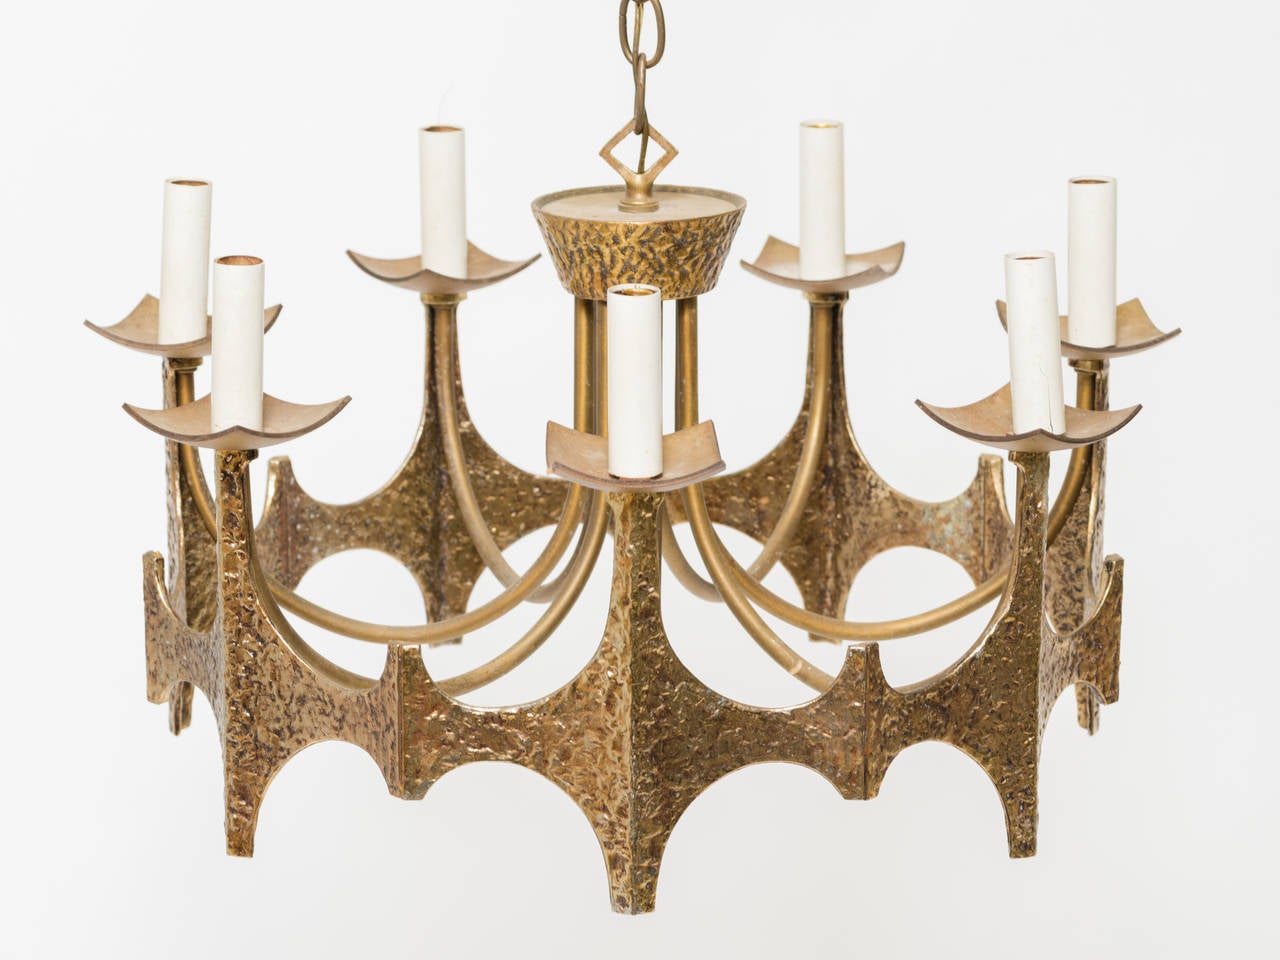 Brutalist chandelier in textured hammered metal finish.